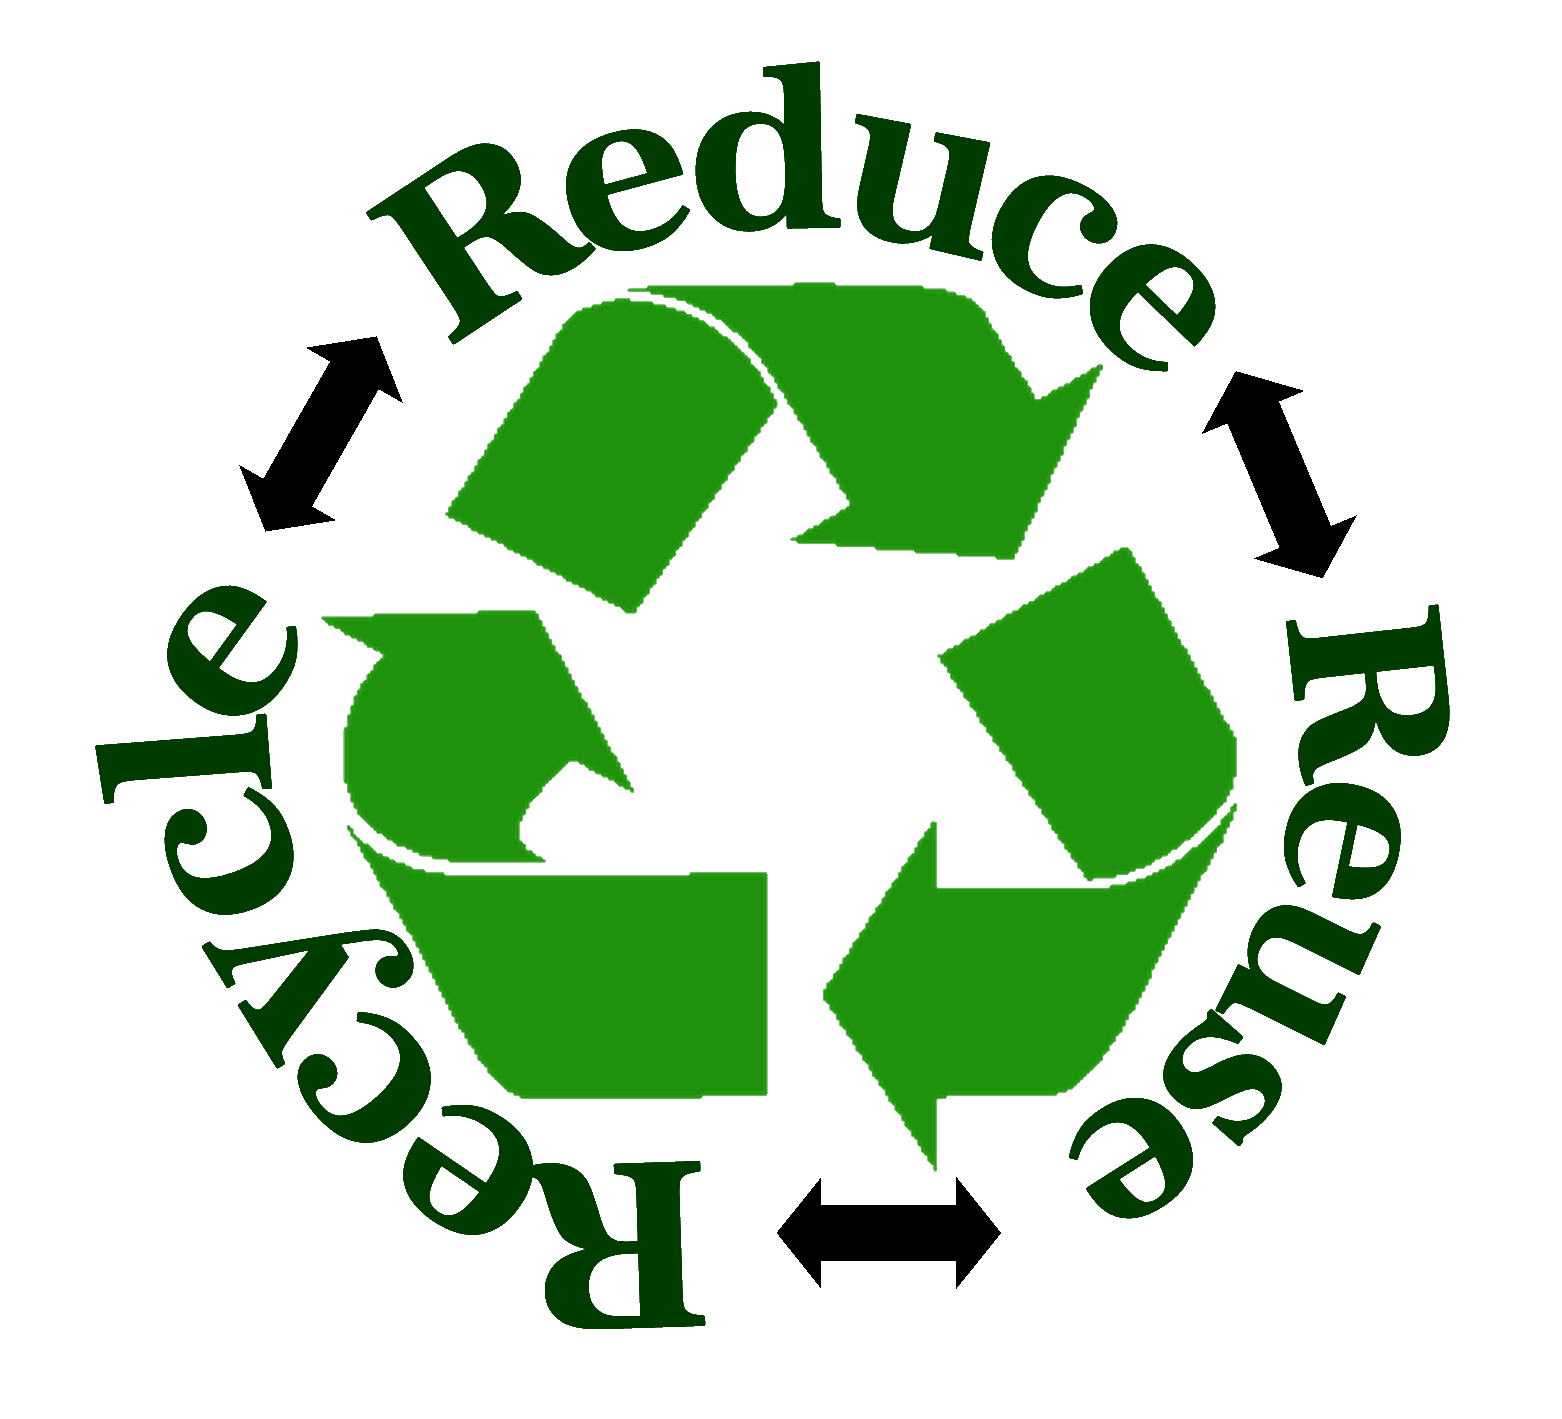 Sharp Toner Recycling Program - It's FREE